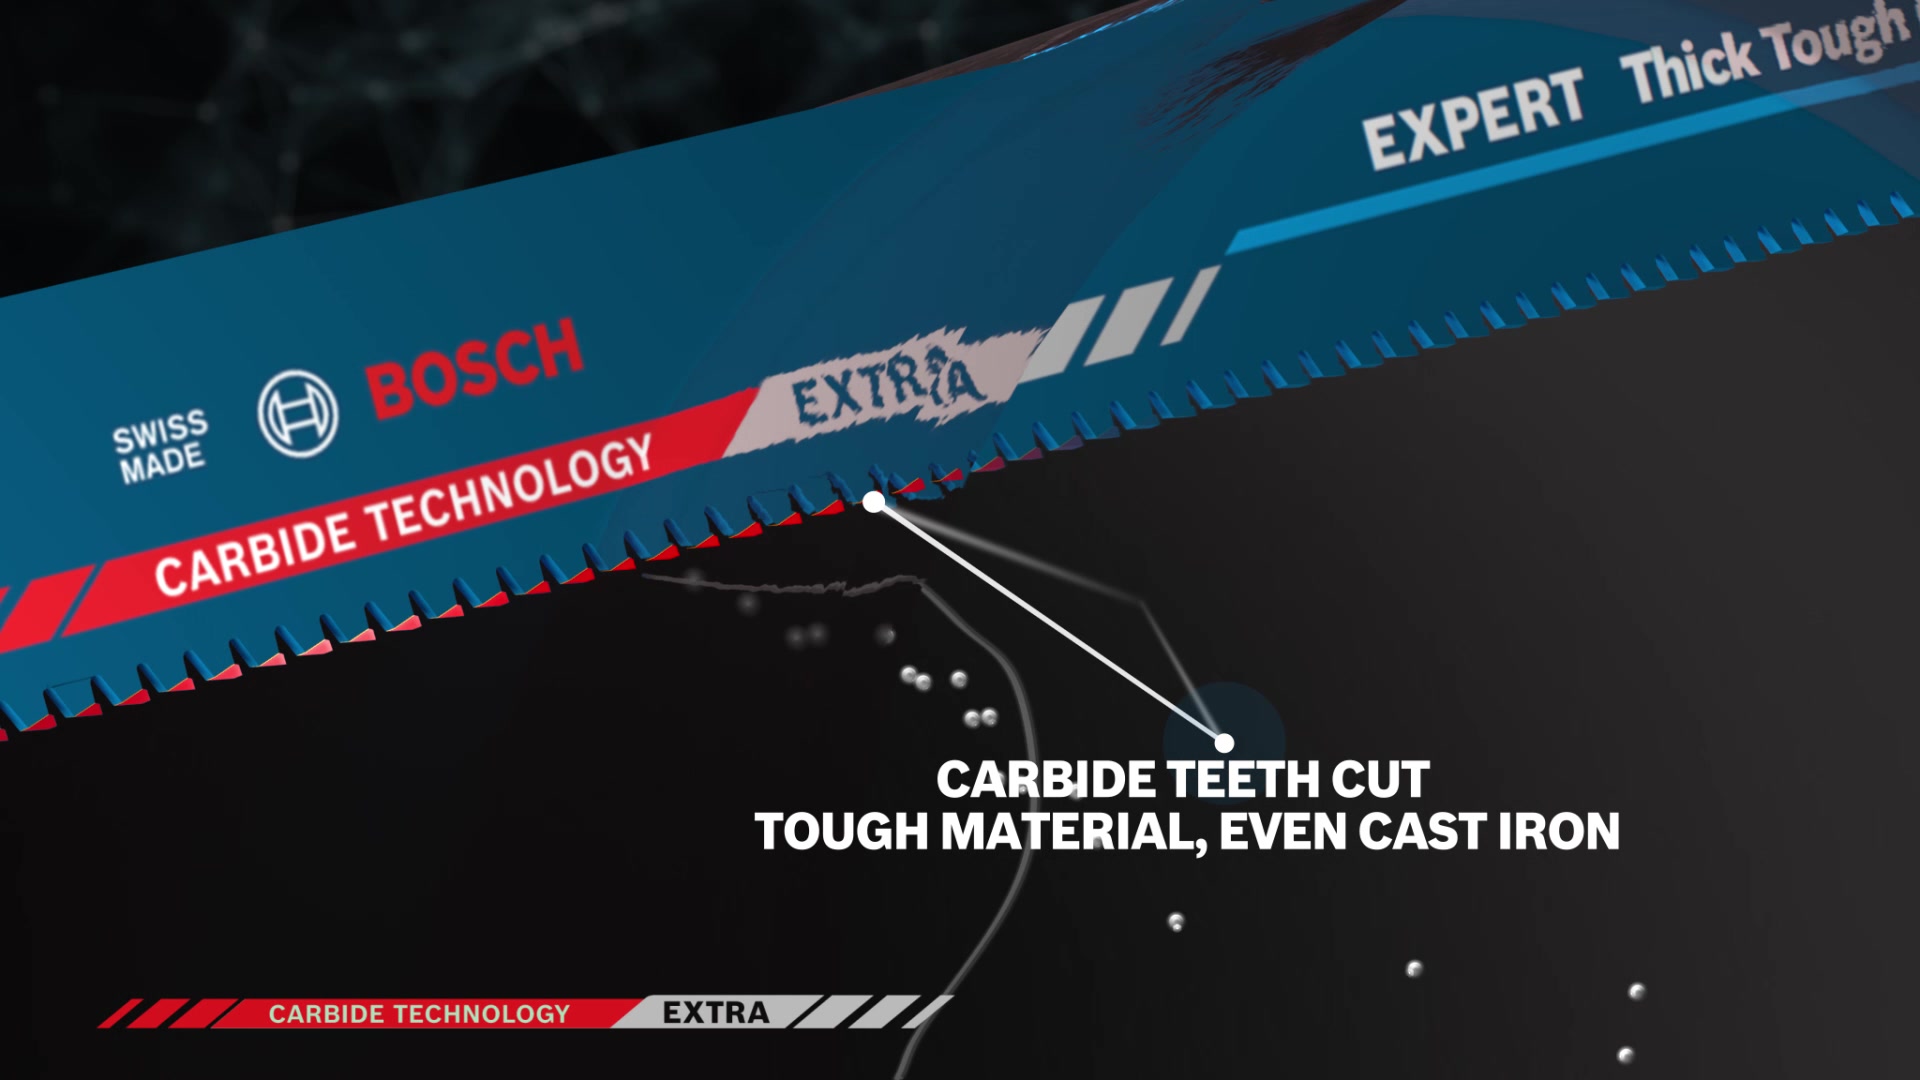 EXPERT Thick Tough Metal S555CHC